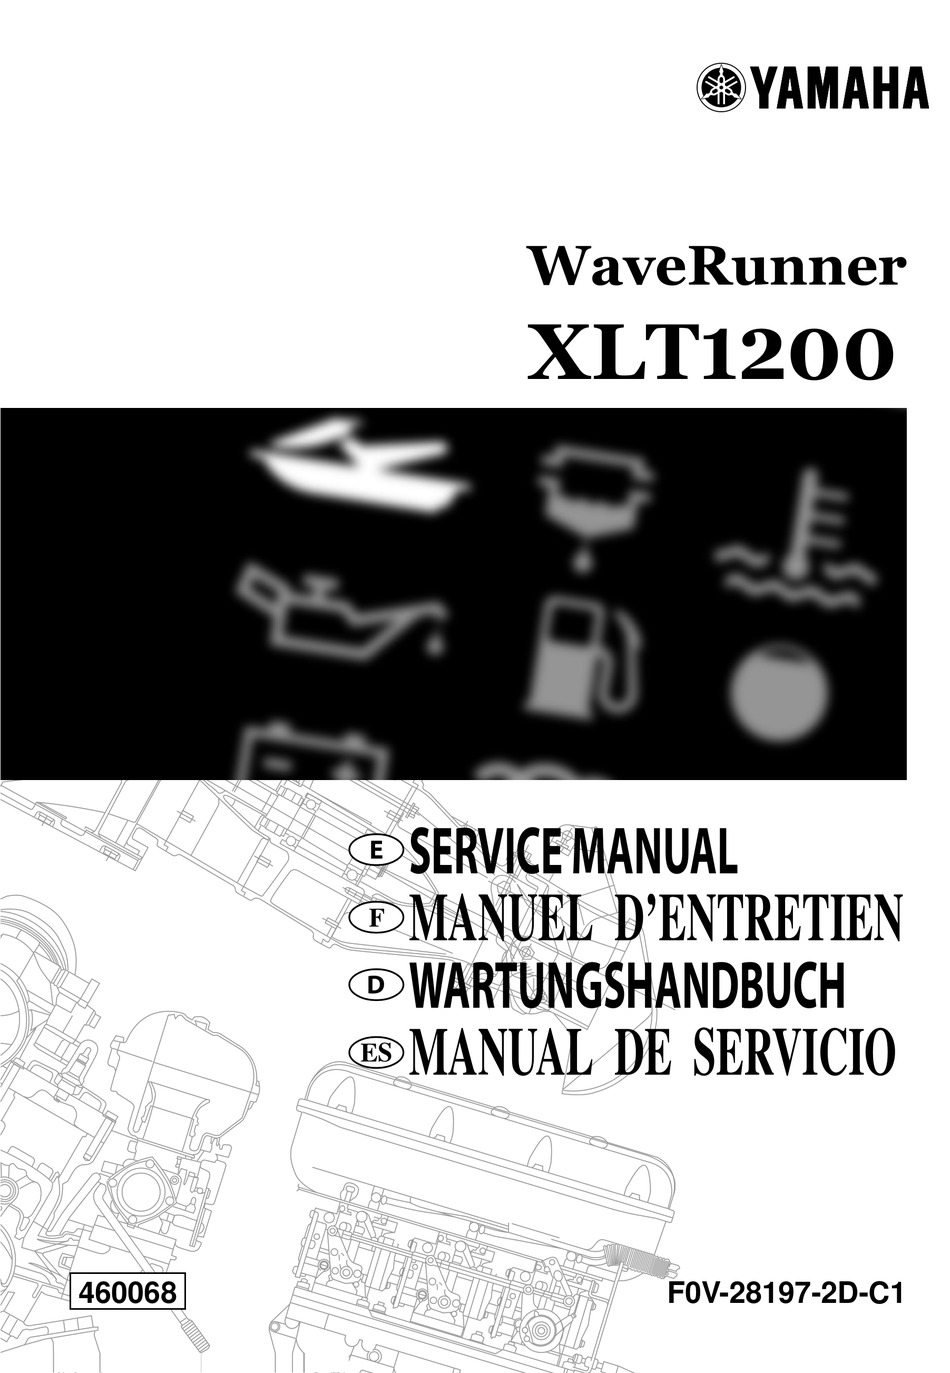 YAMAHA WAVERUNNER XLT1200 SERVICE MANUAL Pdf Download | ManualsLib  Yamaha Xlt 1200 Wiring Diagram    ManualsLib